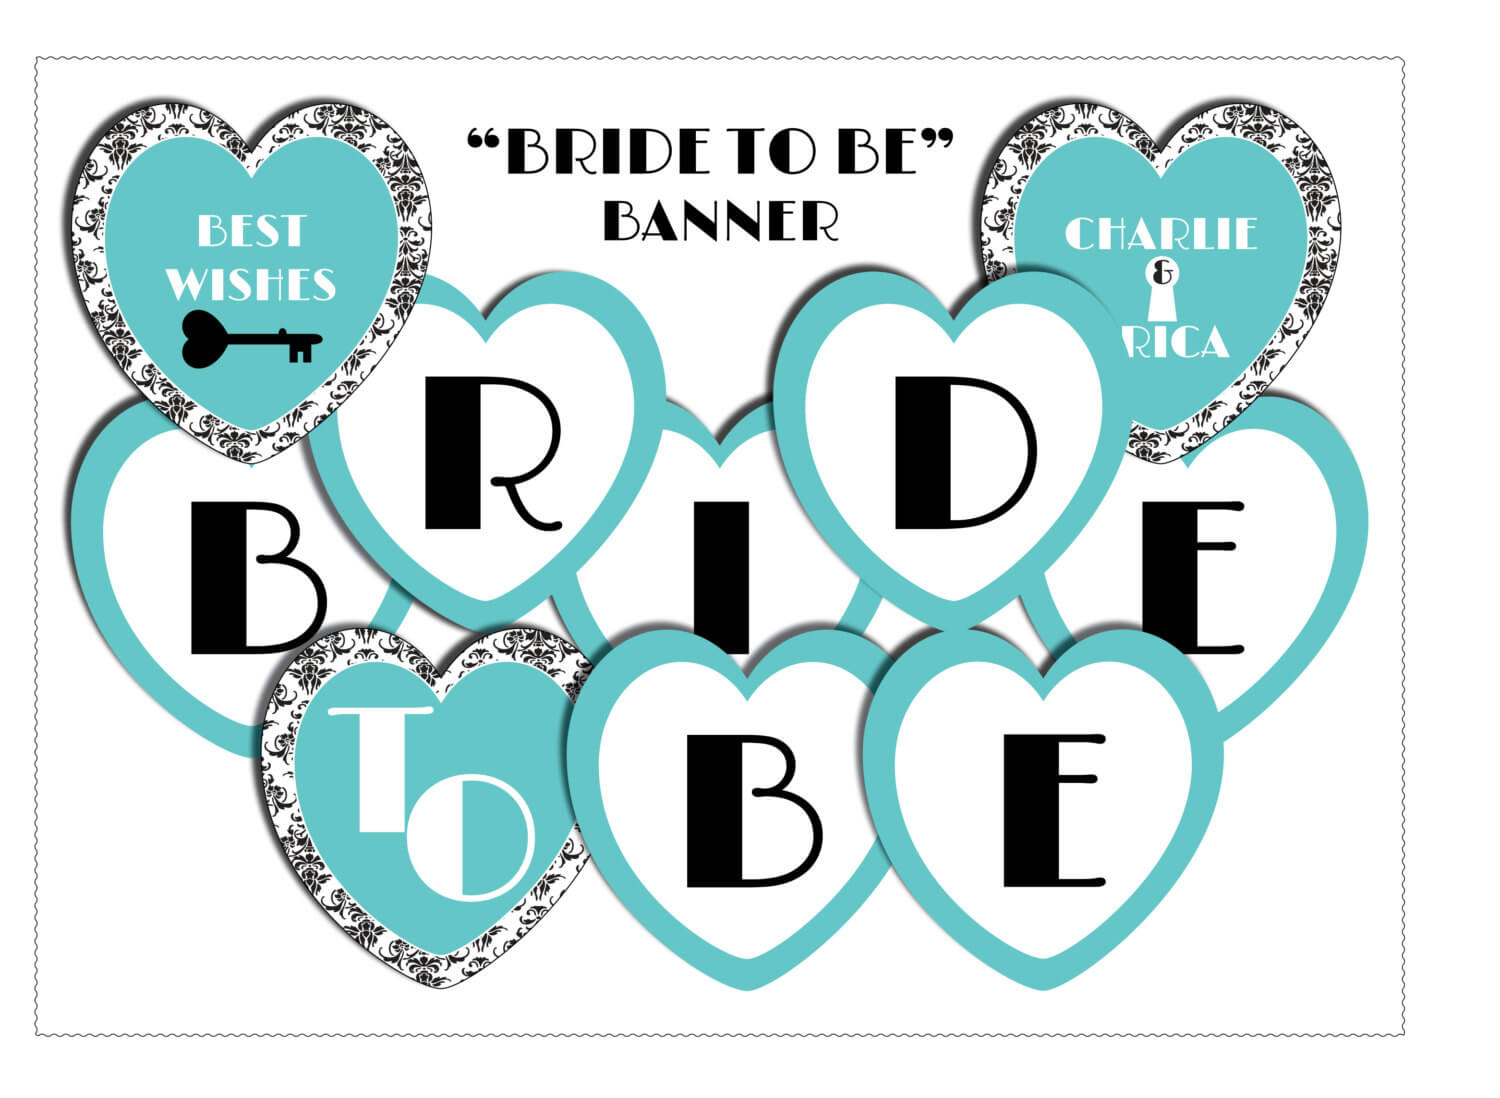 From Miss To Mrs Banner Template – Best Banner Design 2018 Regarding Free Bridal Shower Banner Template